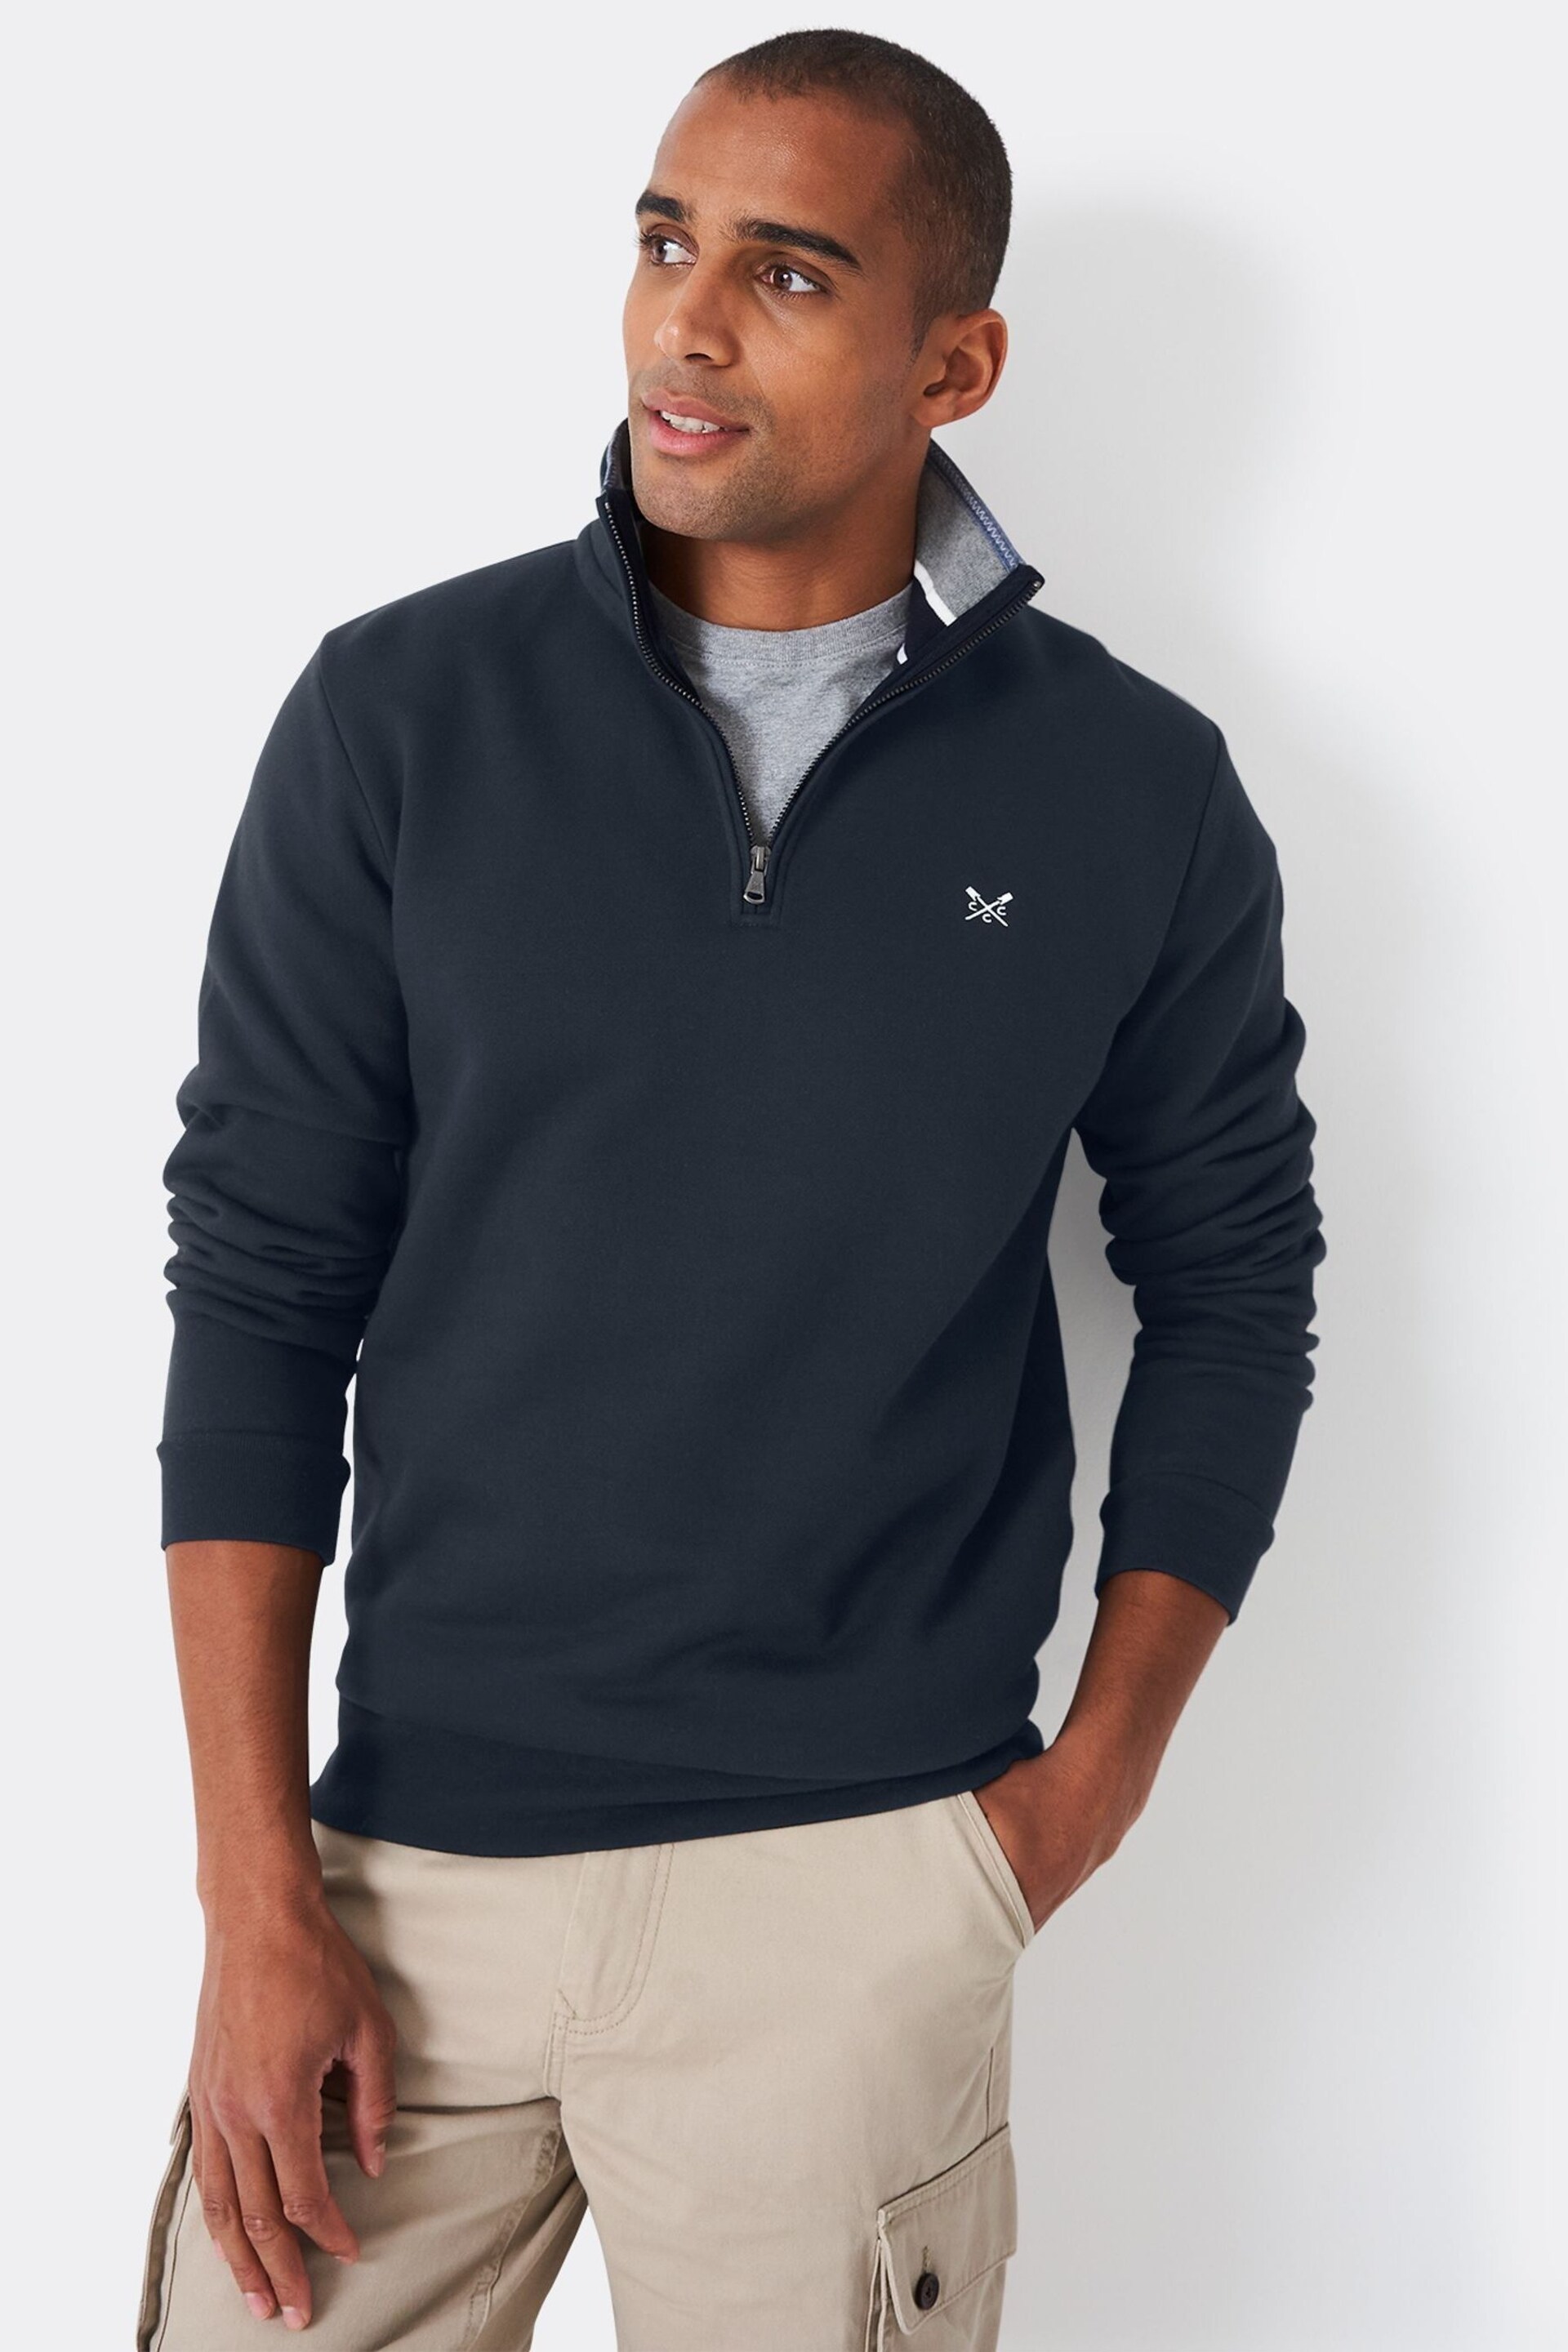 Crew Clothing Classic Half Zip Sweater - Image 2 of 5